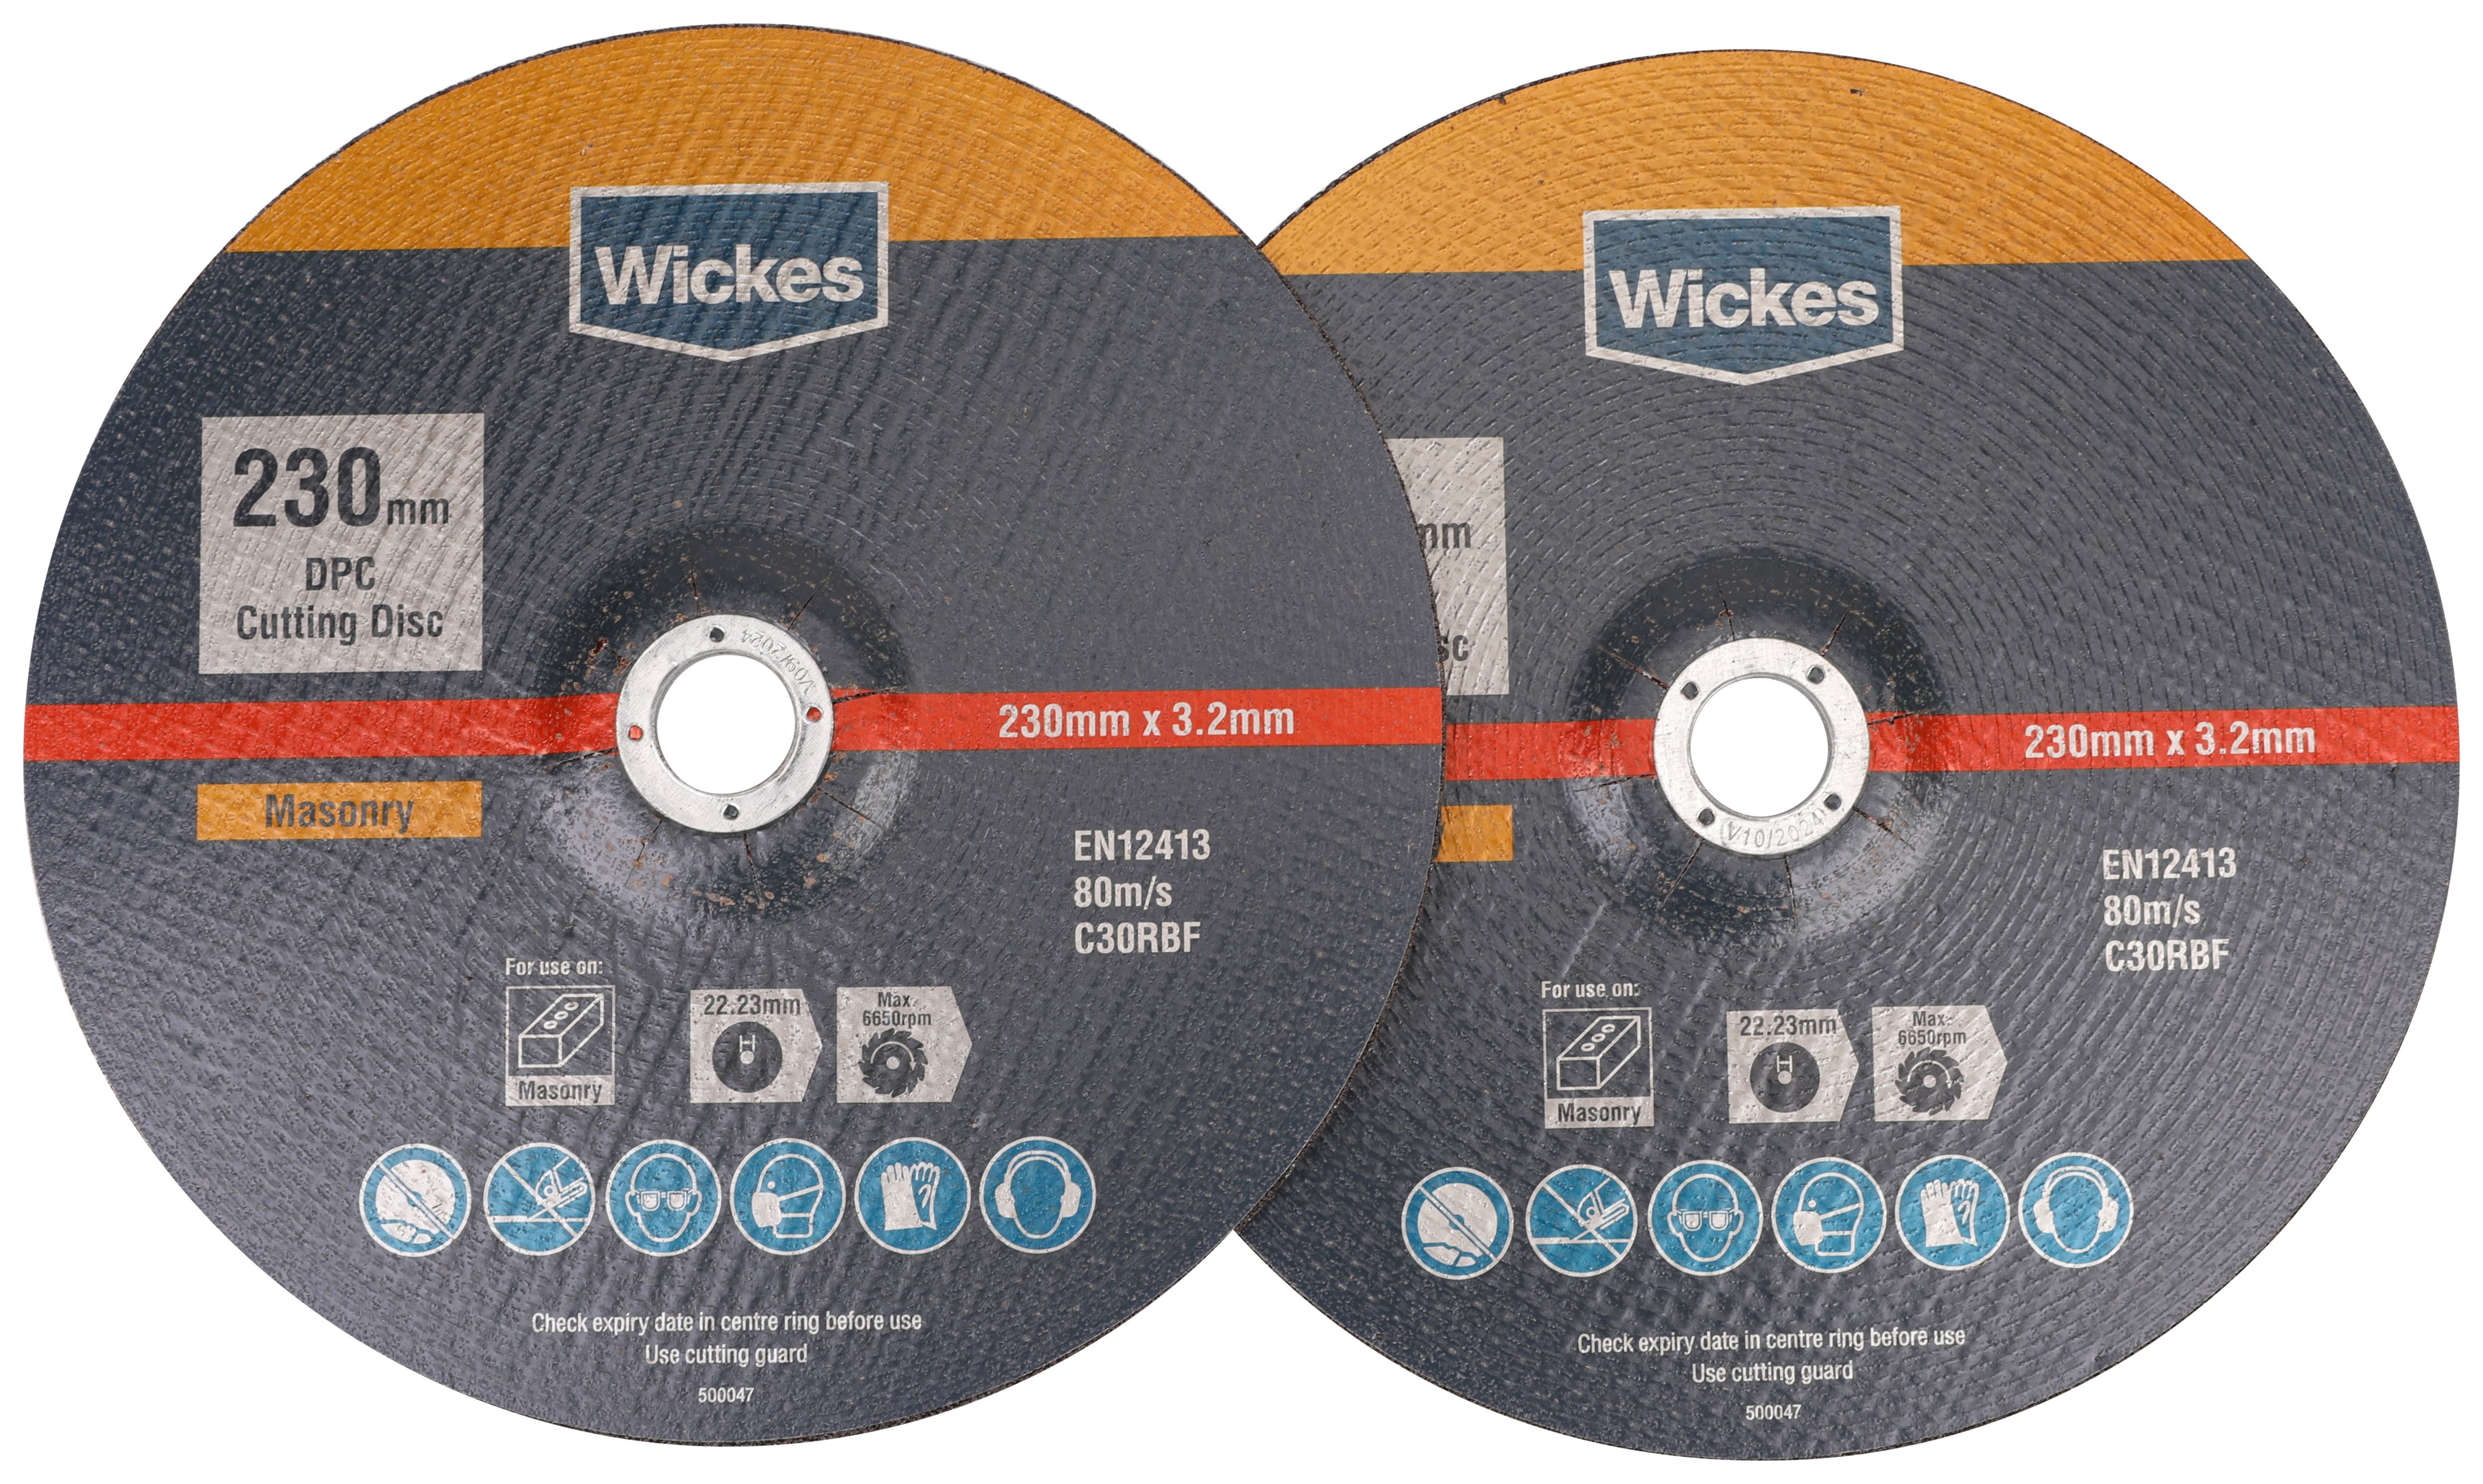 Wickes Masonry DPC Cutting Disc - 230mm - Pack of 2